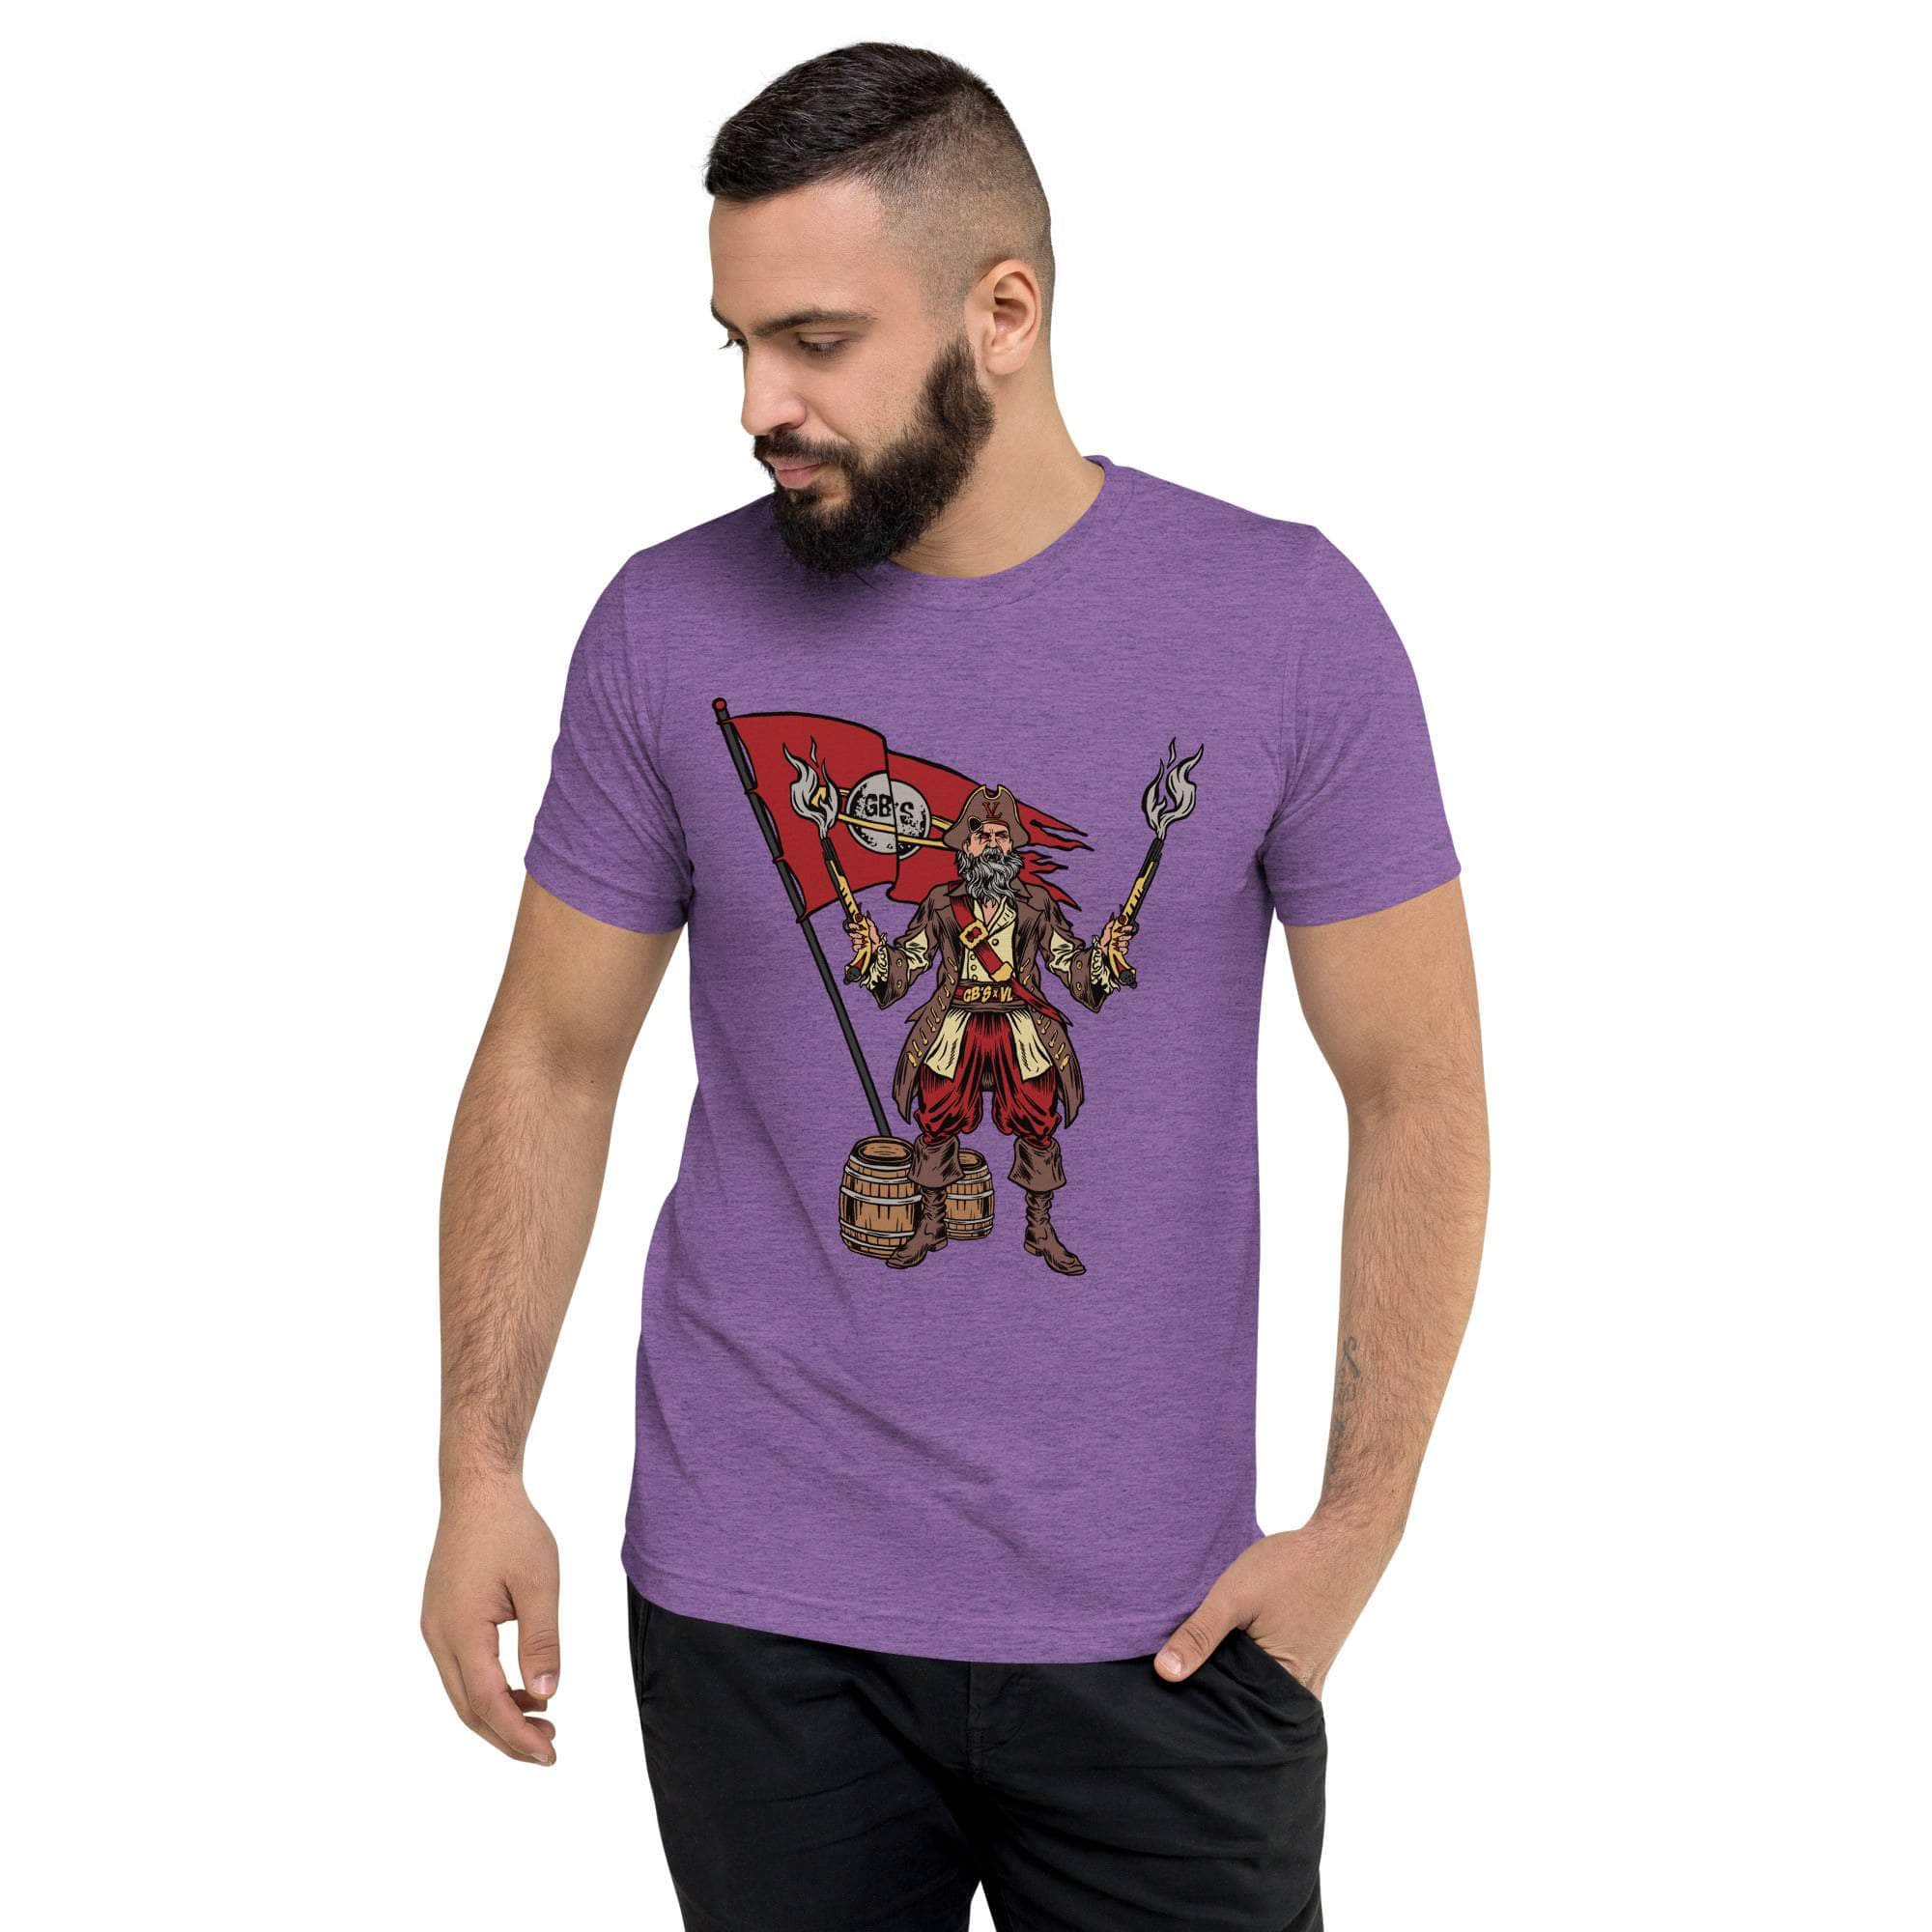 GBNY Purple Triblend / XS Vamp Life X GBNY "Pirate Vamp" T-shirt - Men's 1187077_6568